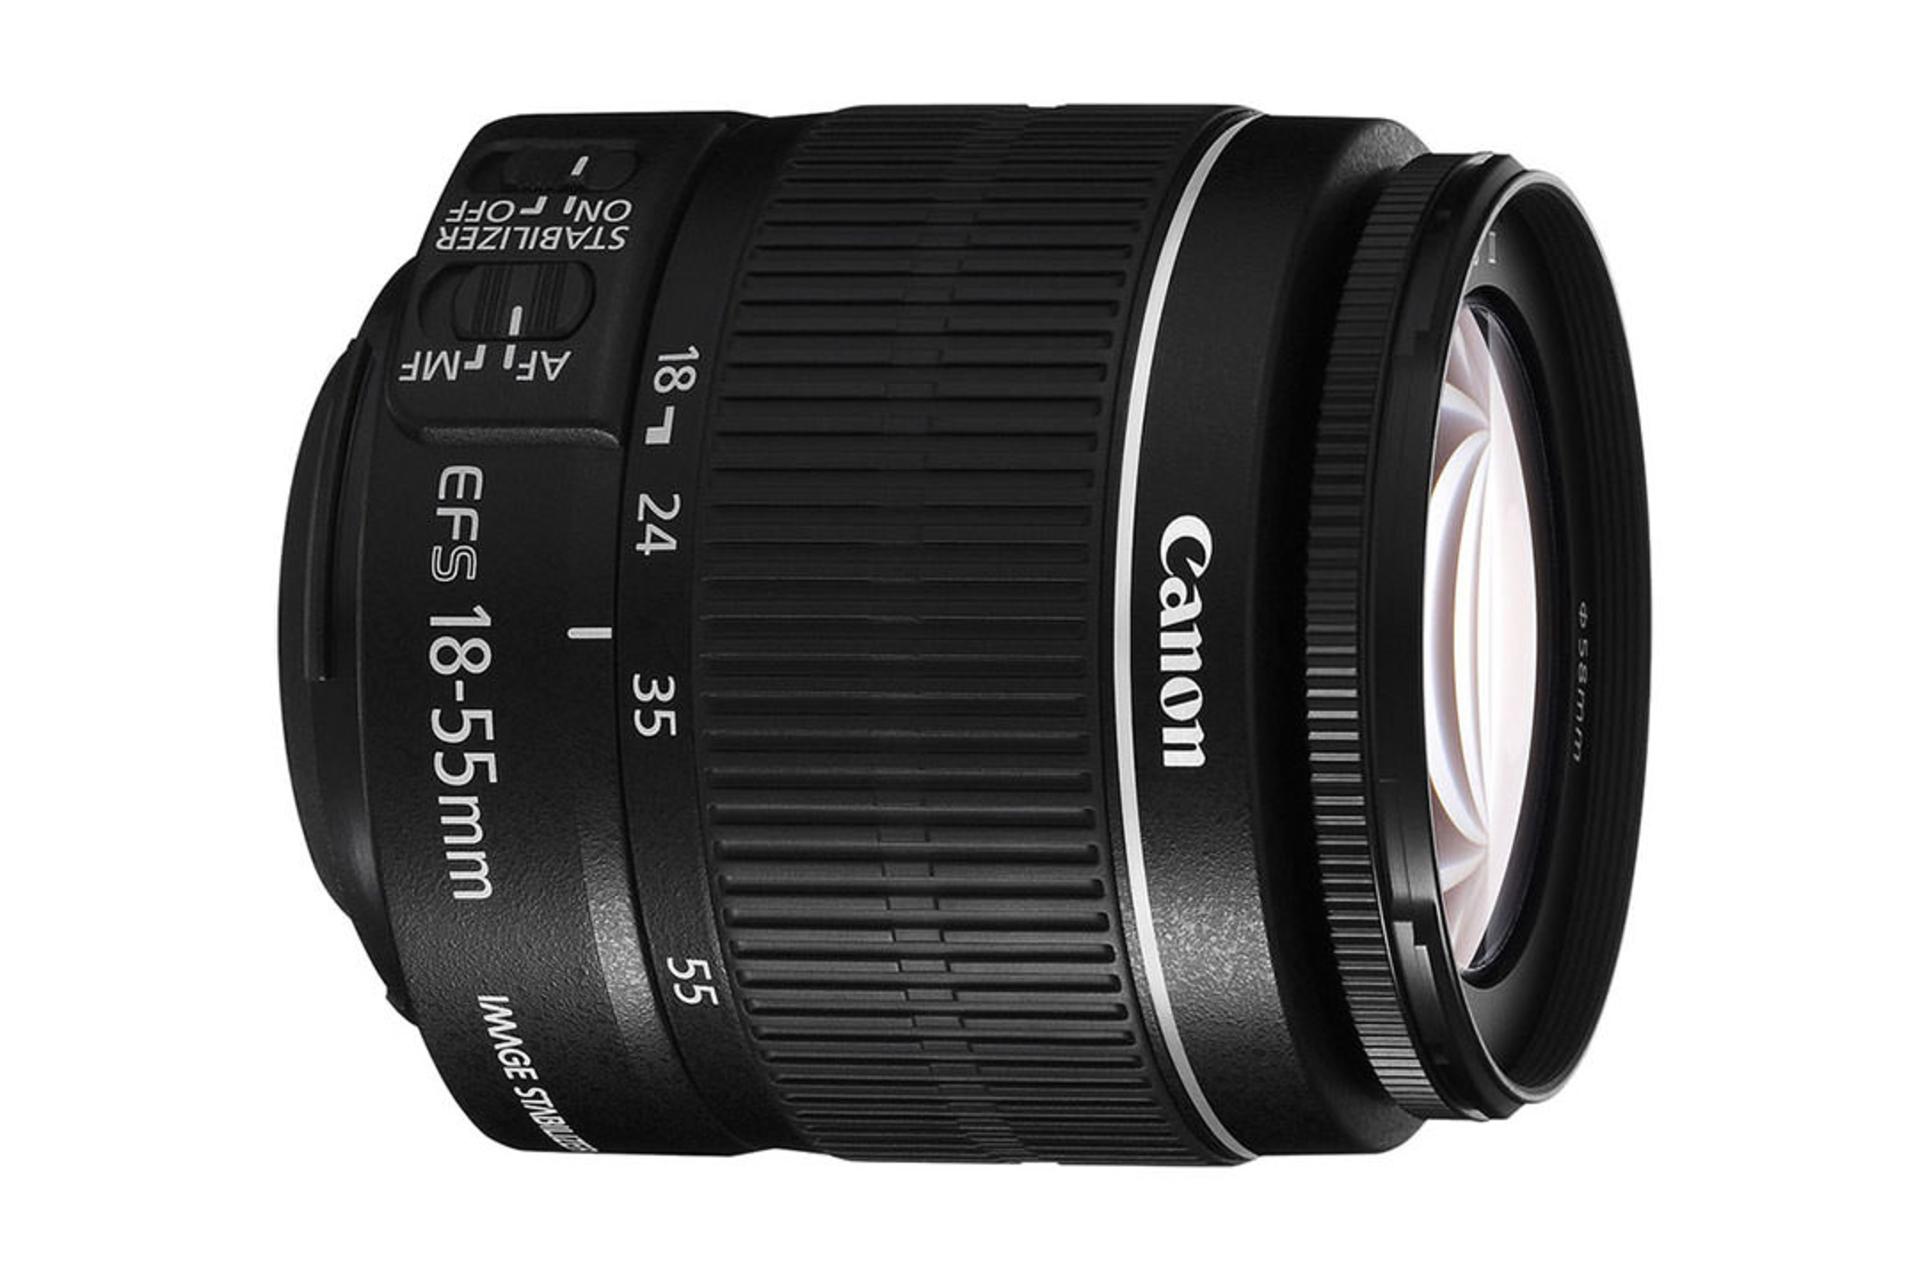 Canon EF-S 18-55mm f/3.5-5.6 III